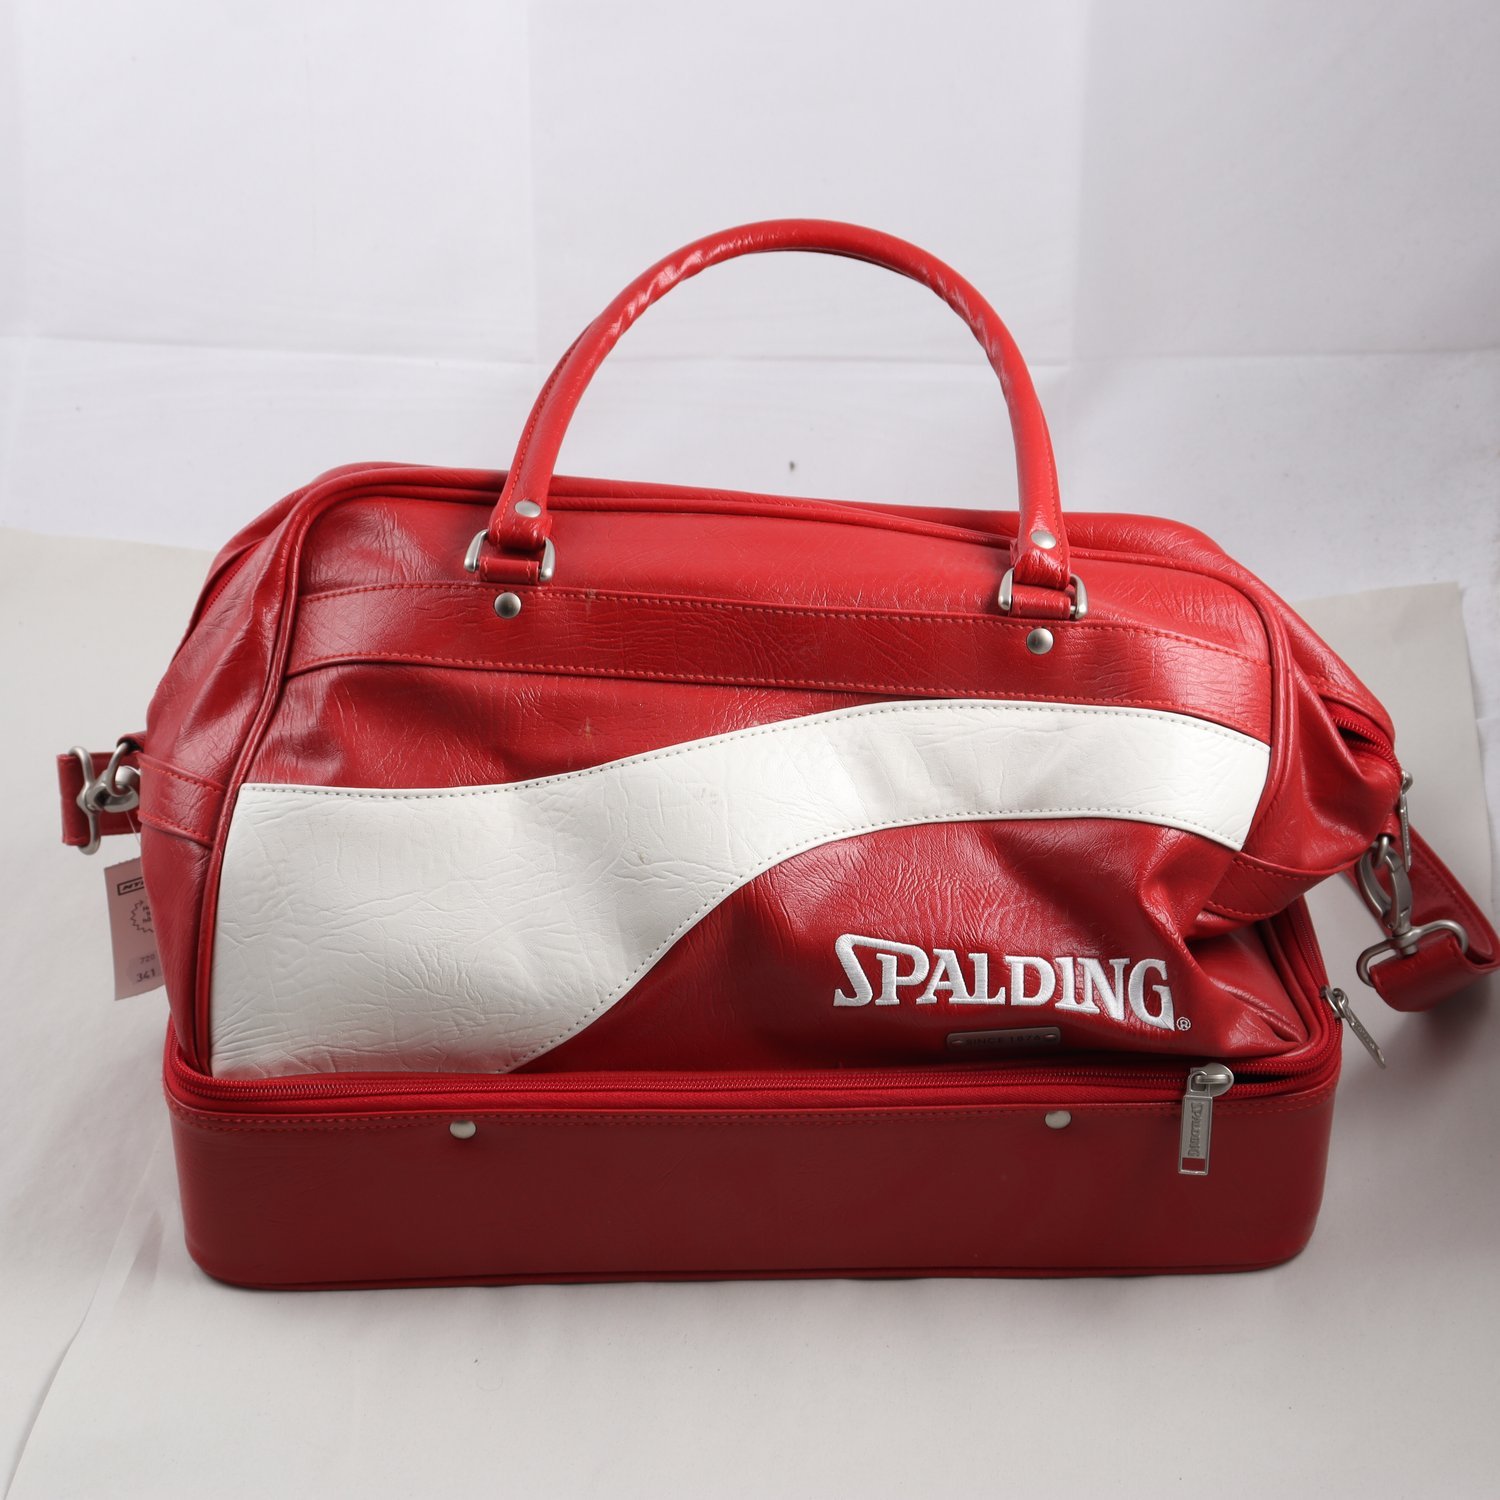 Sportbag, Spalding, röd/vit